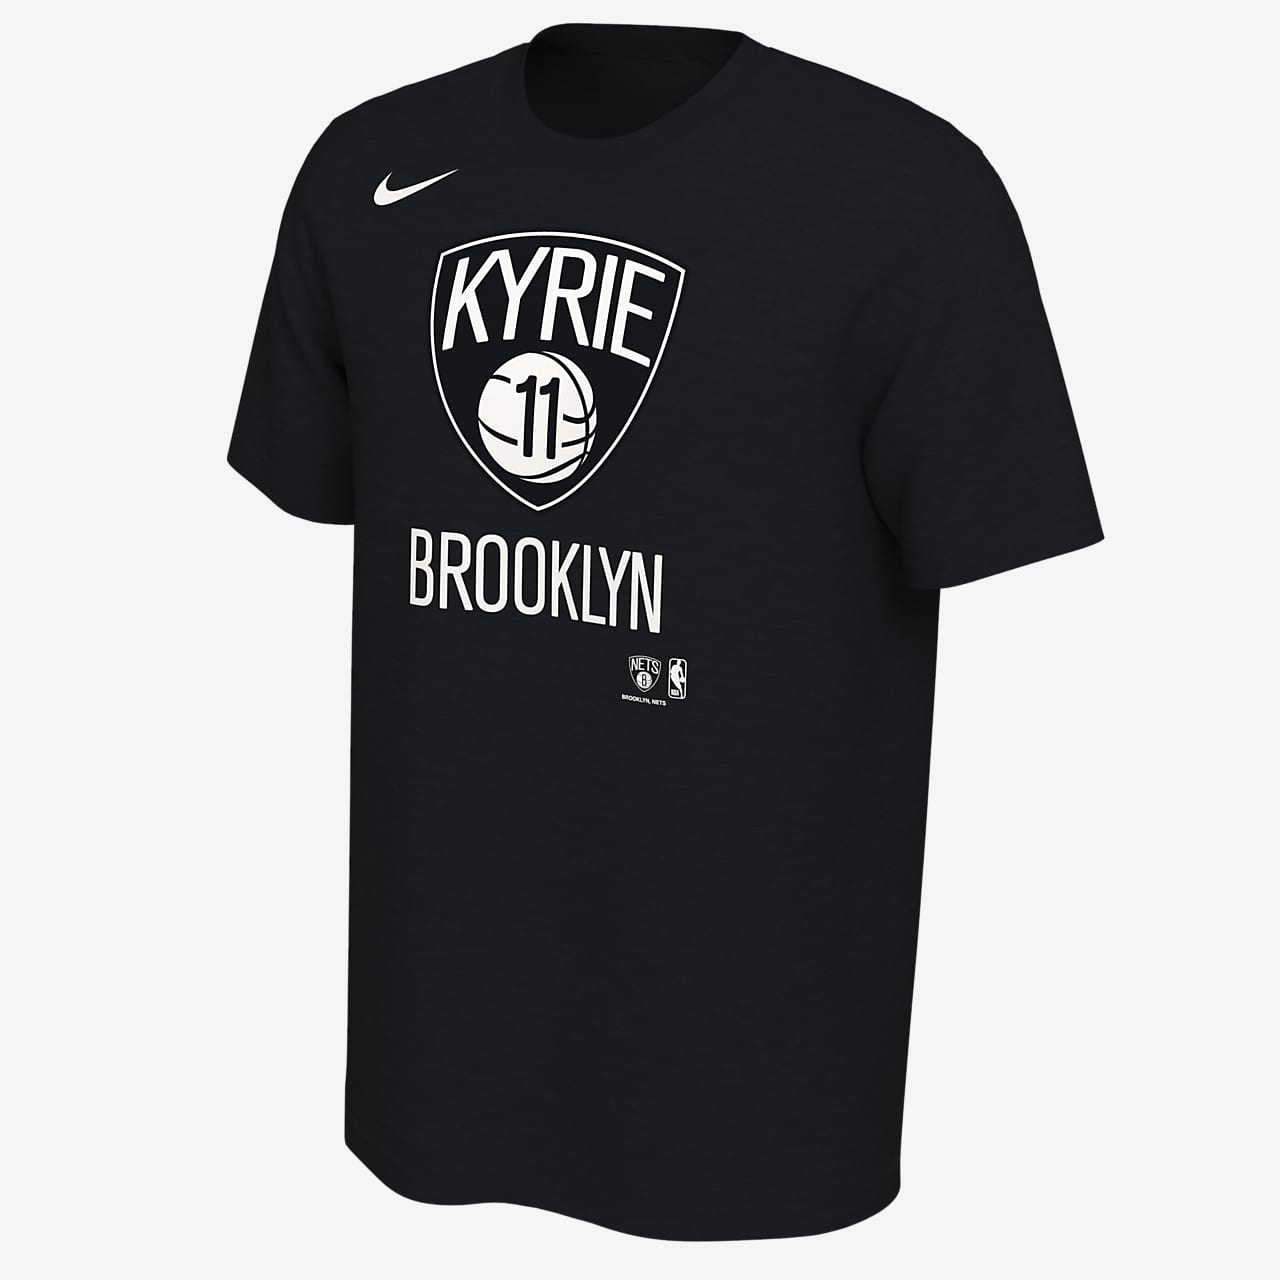 Significativo Implacable Hecho un desastre Playera Nike NBA para hombre Kyrie Irving Nets Logo. Nike.com